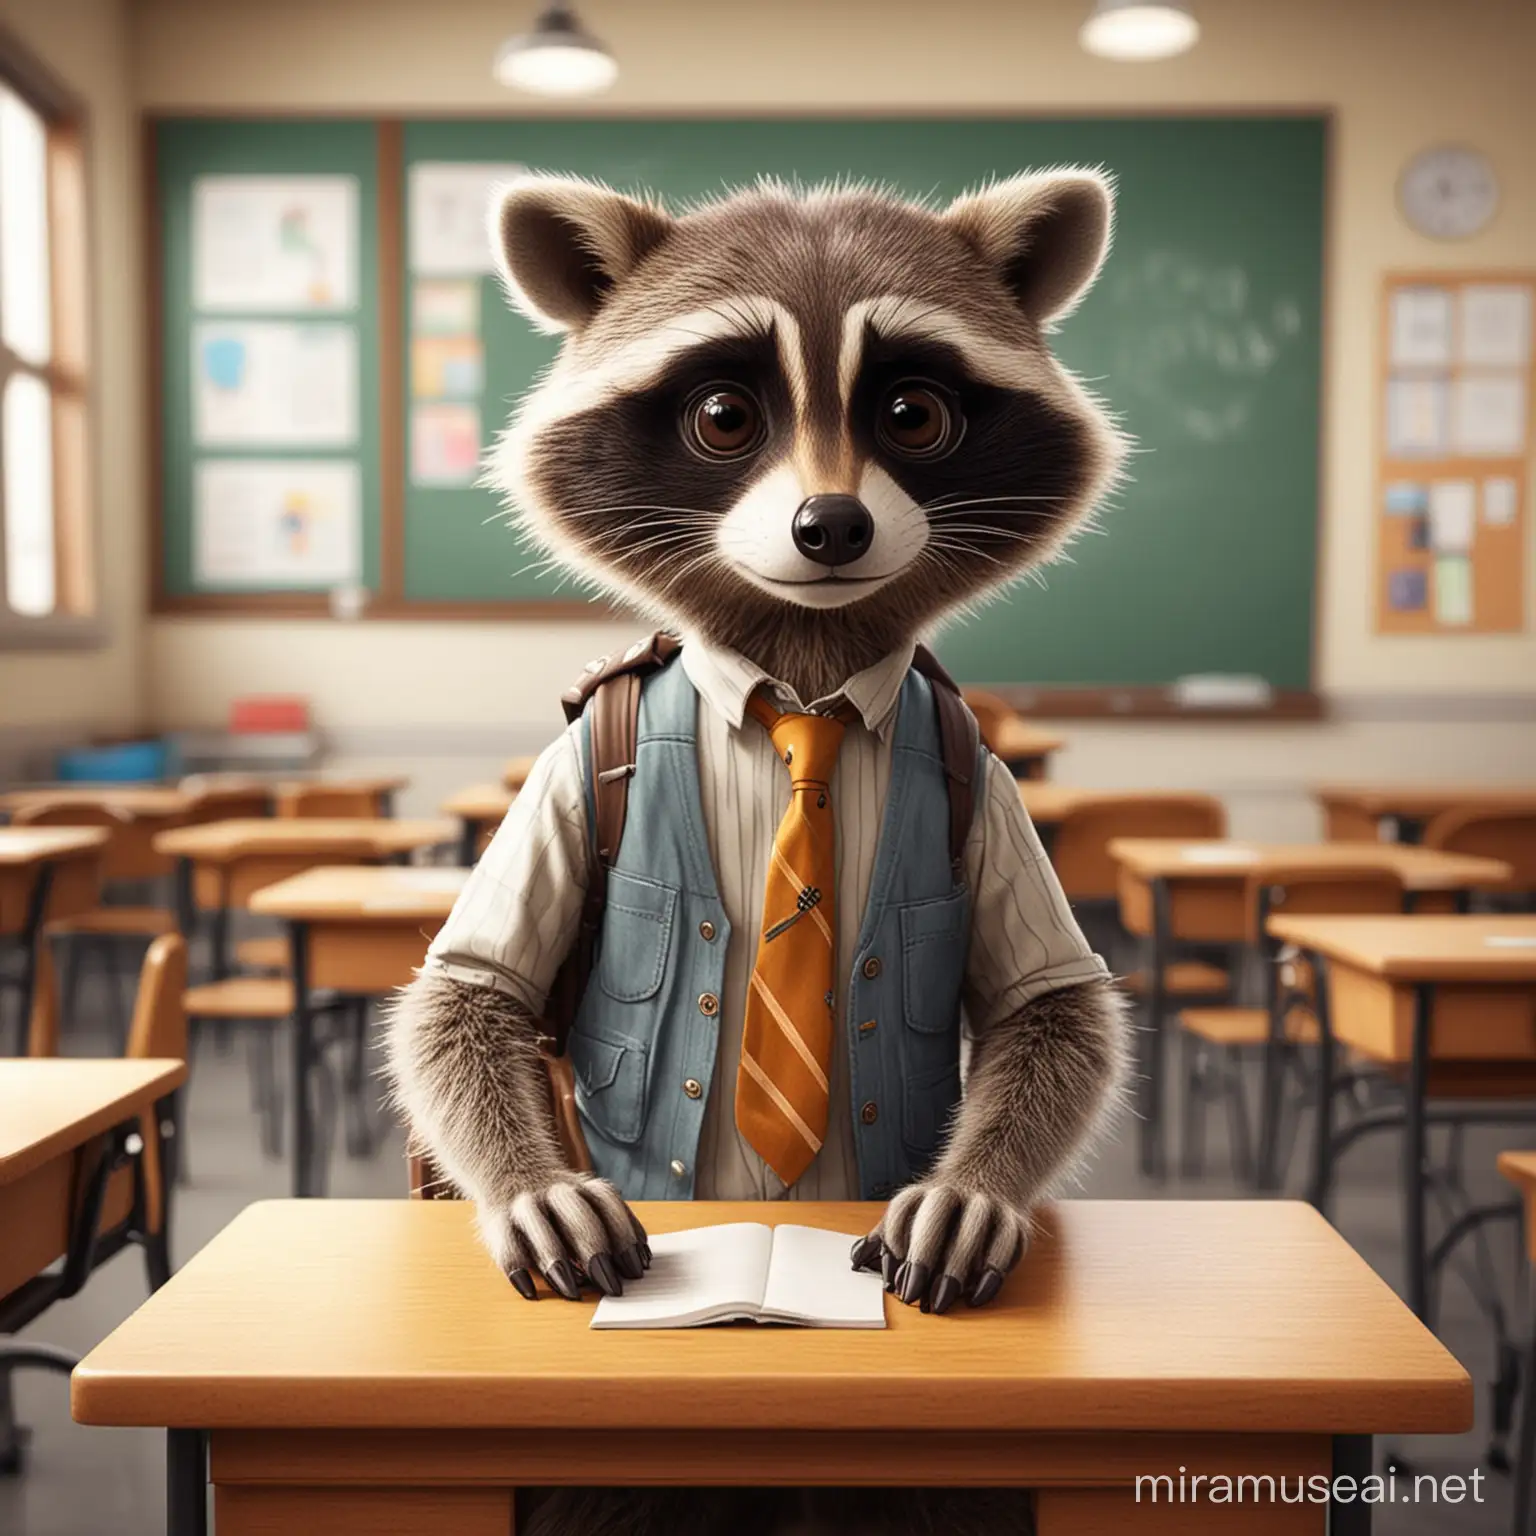 Adorable Cartoon Raccoon Learning in a Classroom Setting